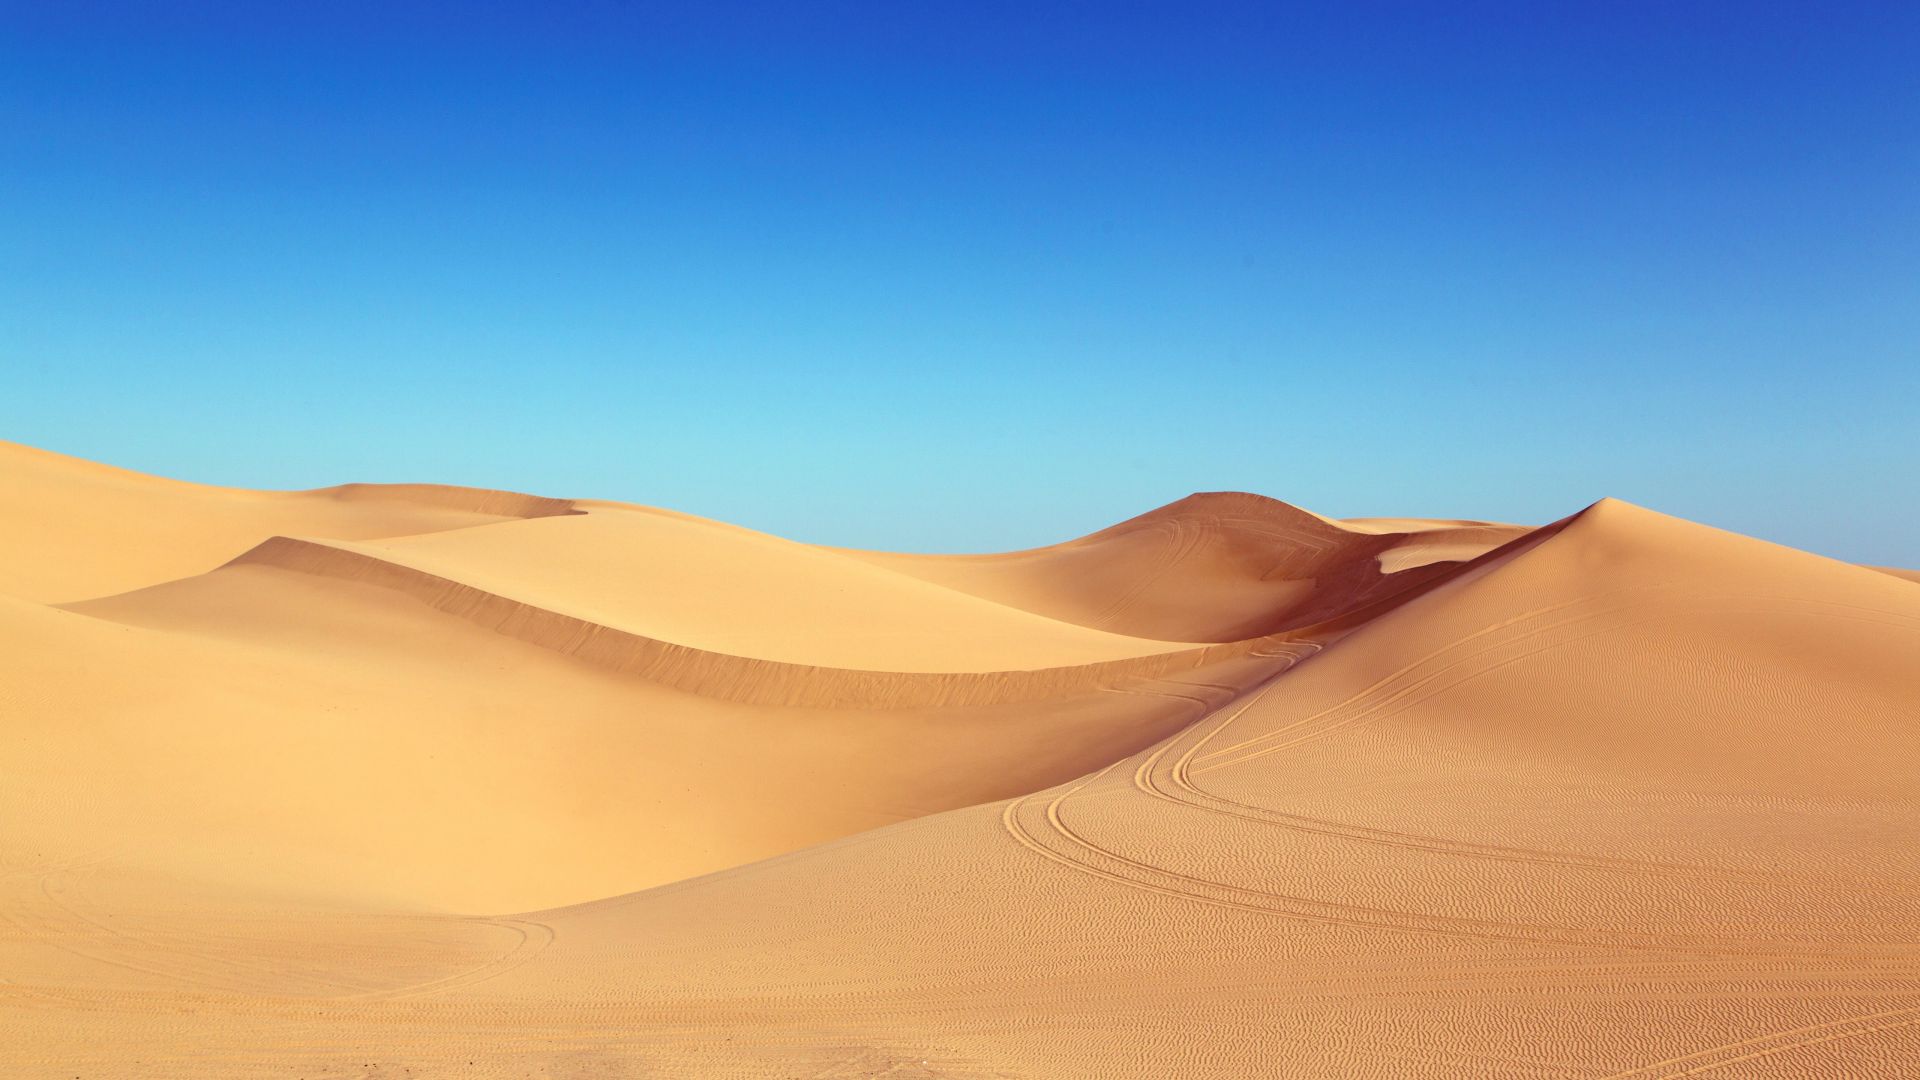 пустыня, 5k, 4k, 8k, песок, дюны, небо, desert, 5k, 4k wallpaper, 8k, sand, algodones dunes (horizontal)